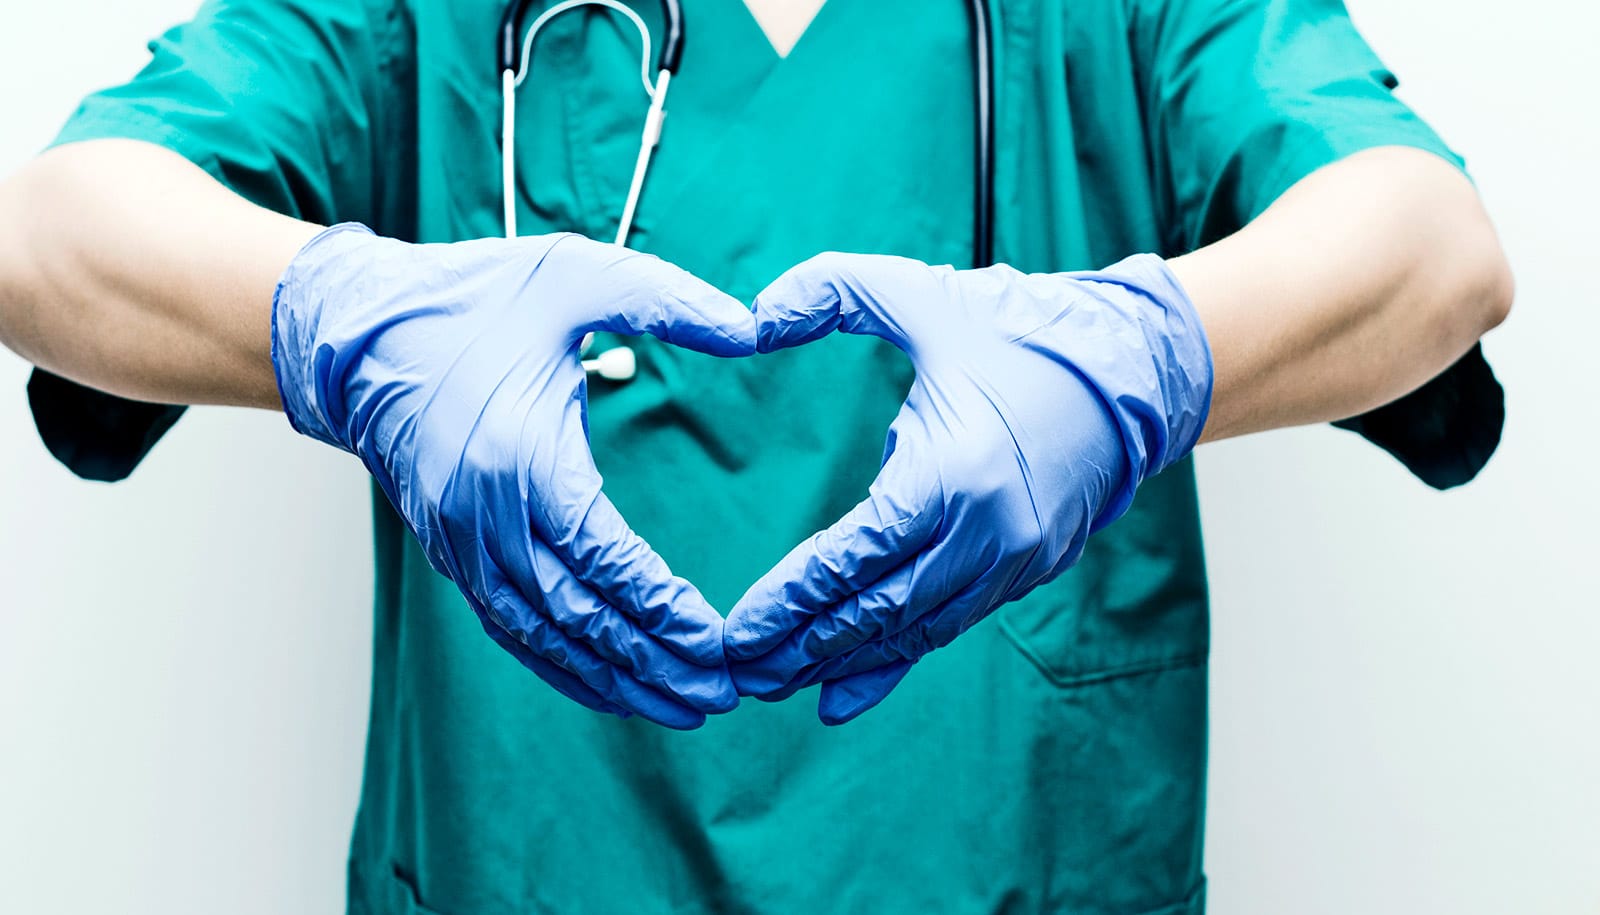 Сердце человека и доктор. Врач с сердечком. Сердце медицина. Сердце в руках врача. Доктор с сердцем в руках.